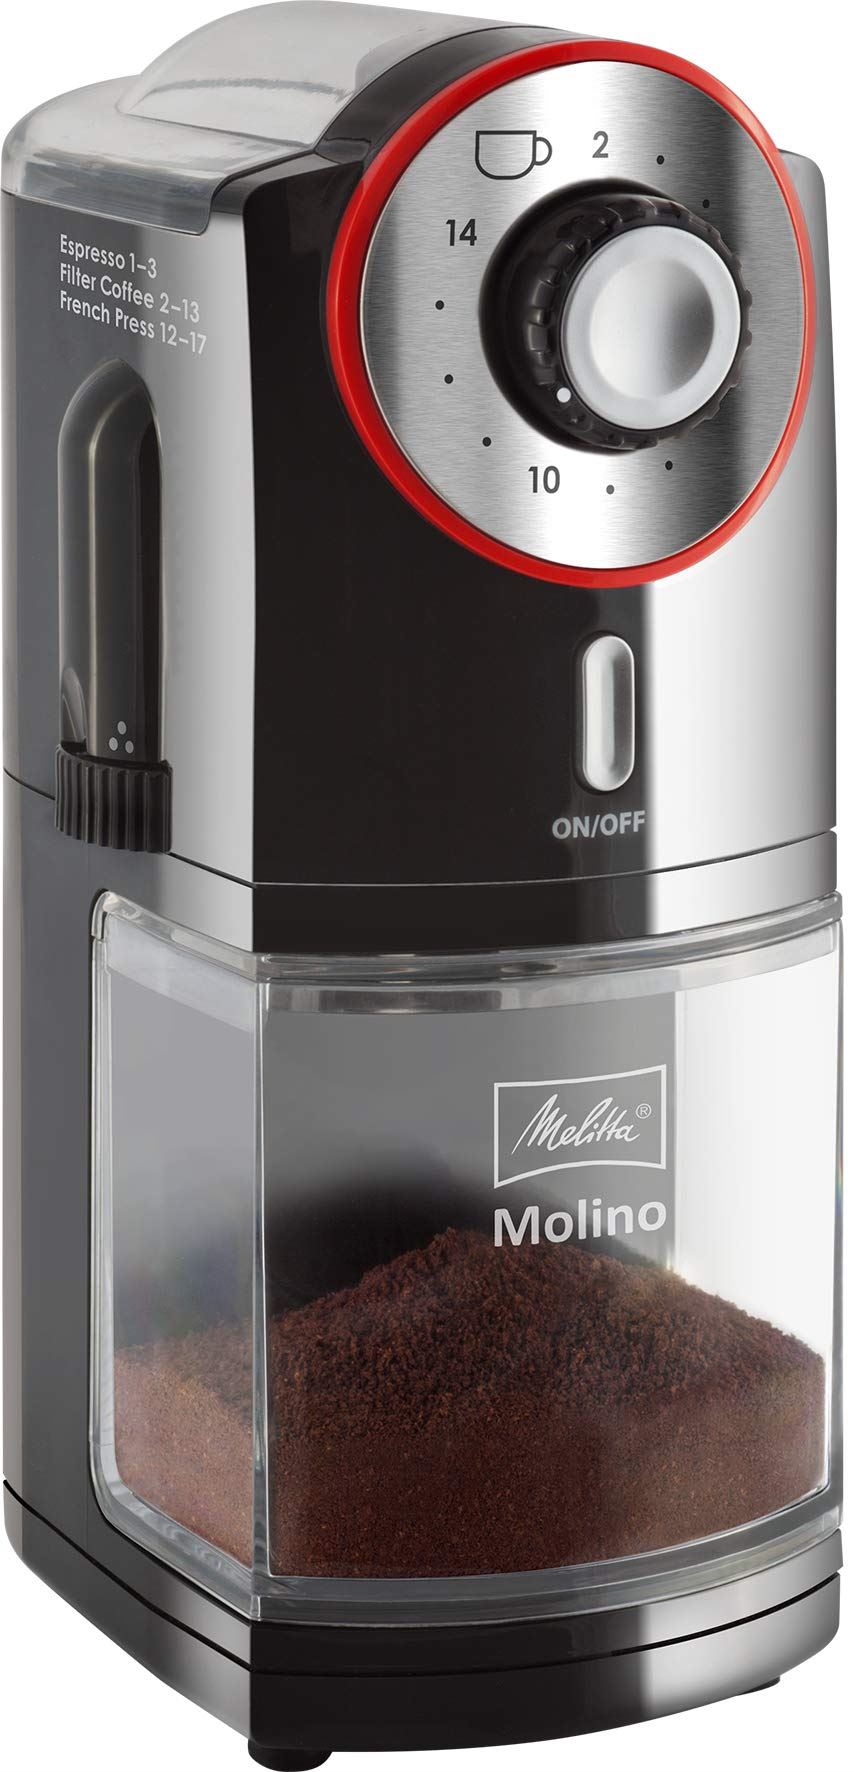 Melitta Molino Coffee Grinder